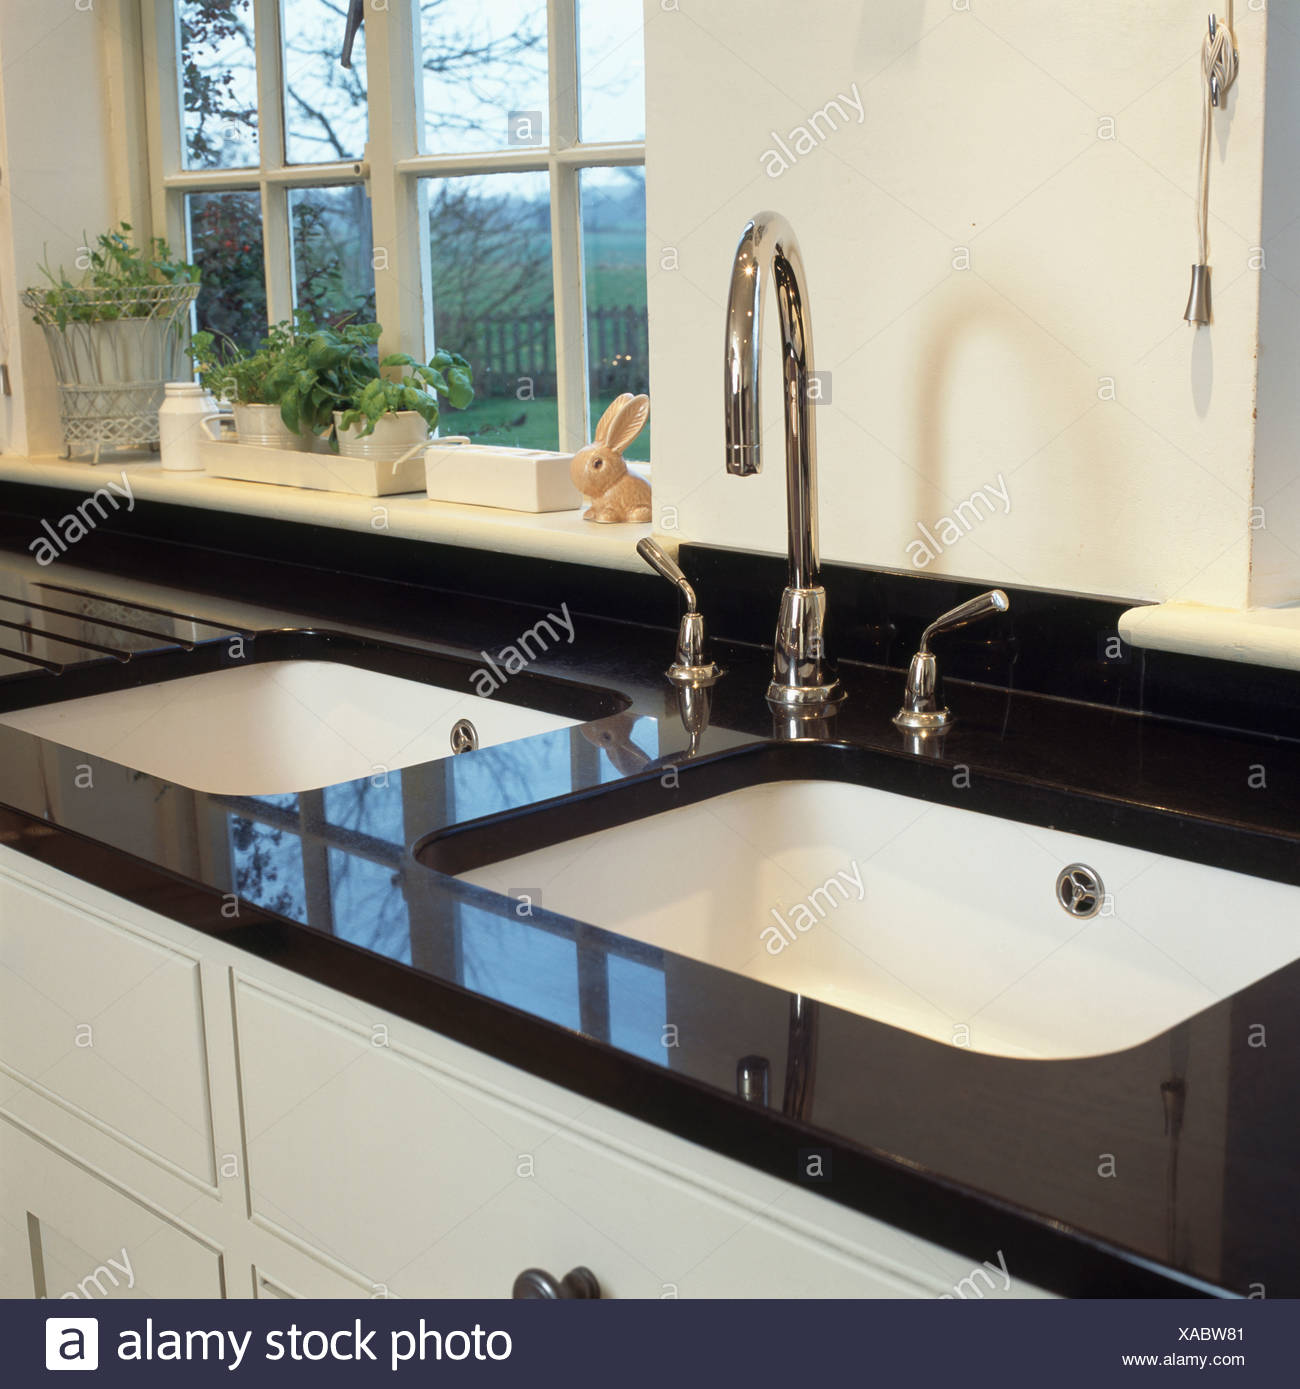 Double White Sinks And Chrome Taps In Black Granite Worktop Below